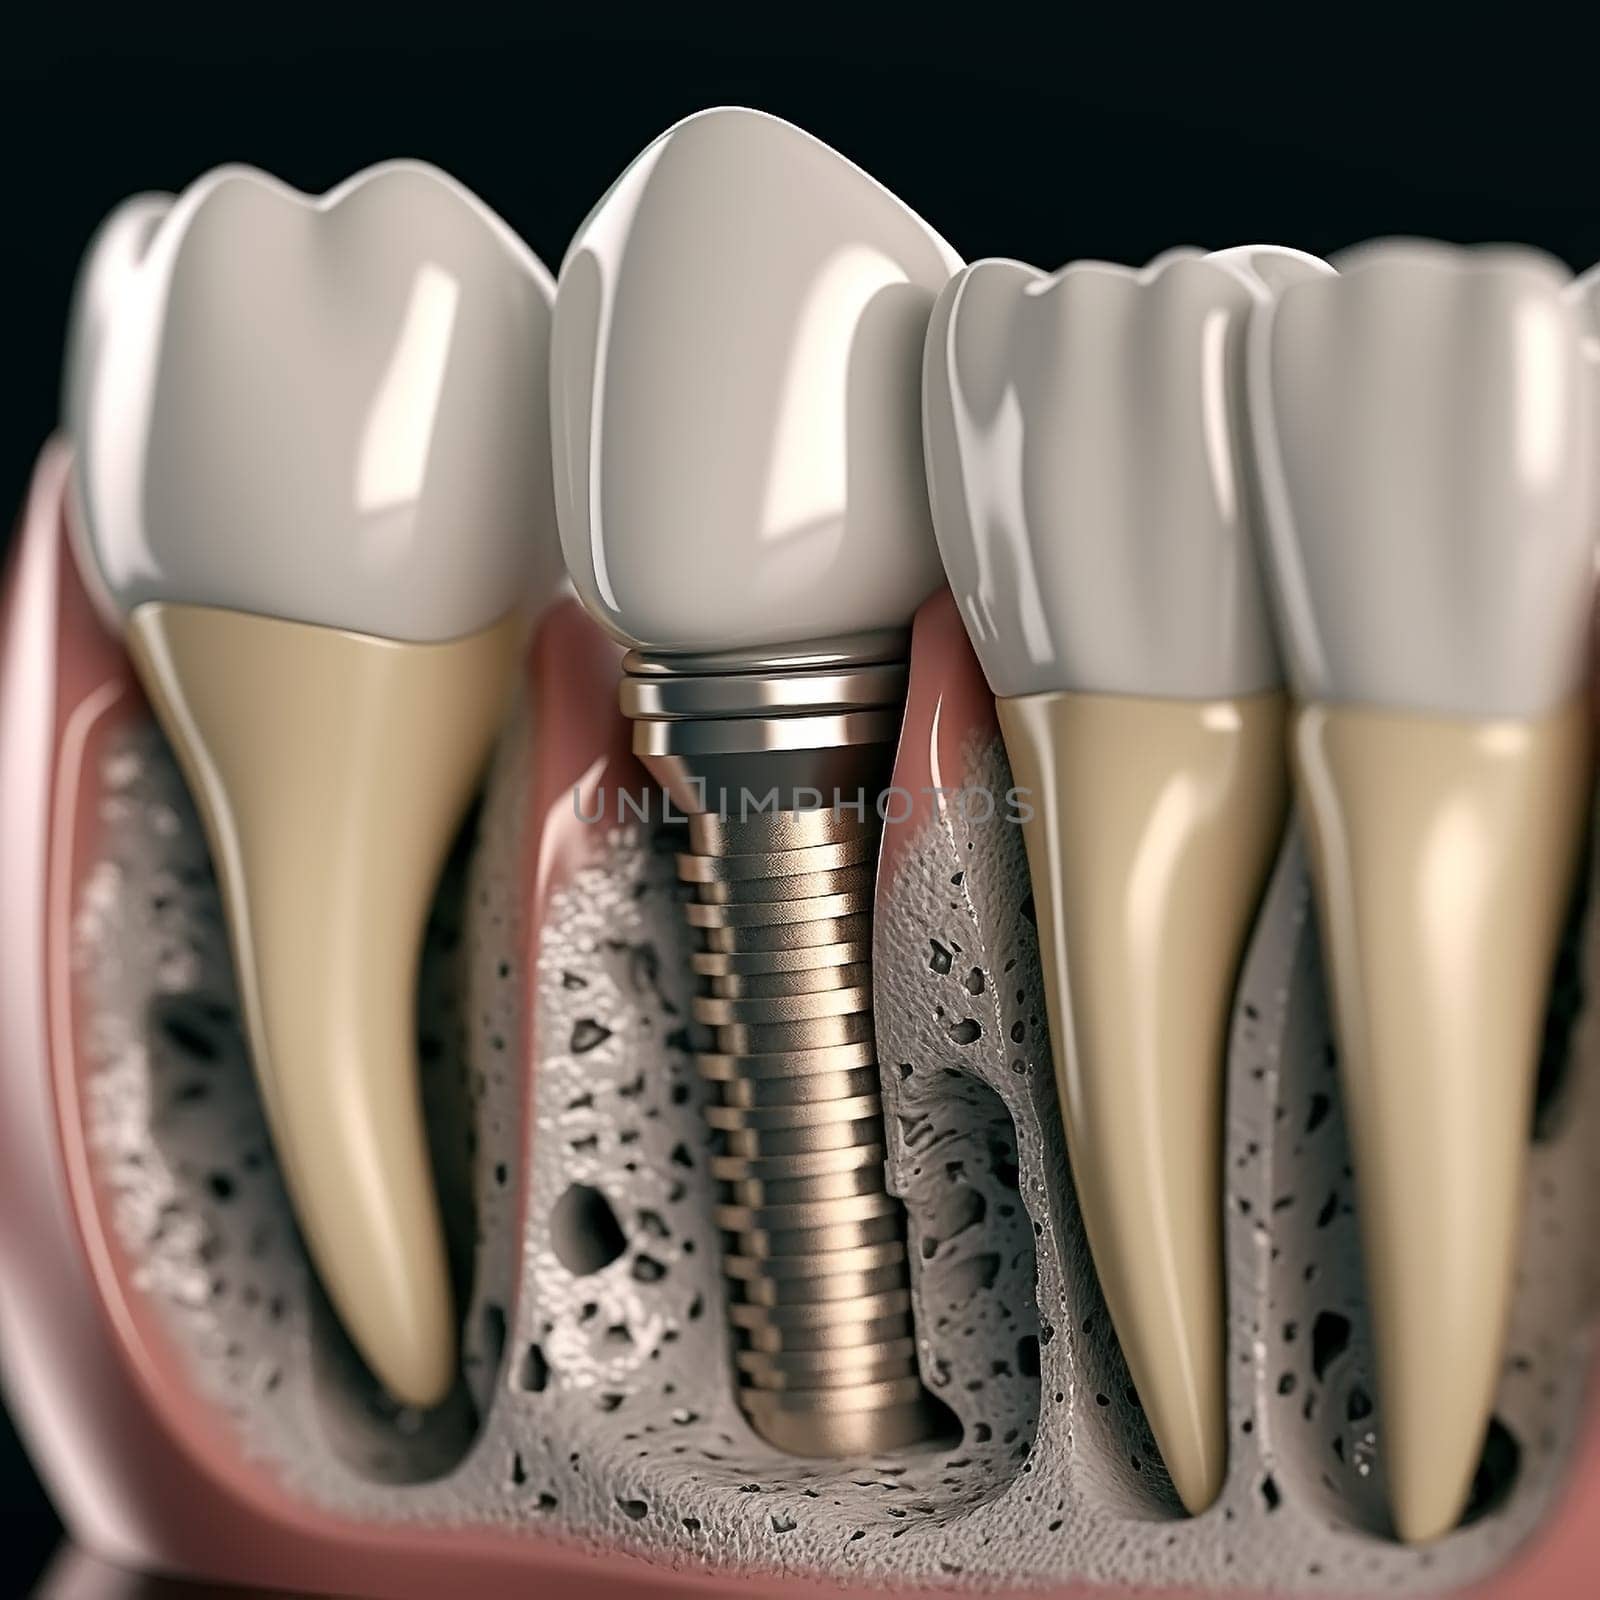 Anatomy of healthy teeth and tooth dental implant in human dentura. 3d illustration by sarymsakov